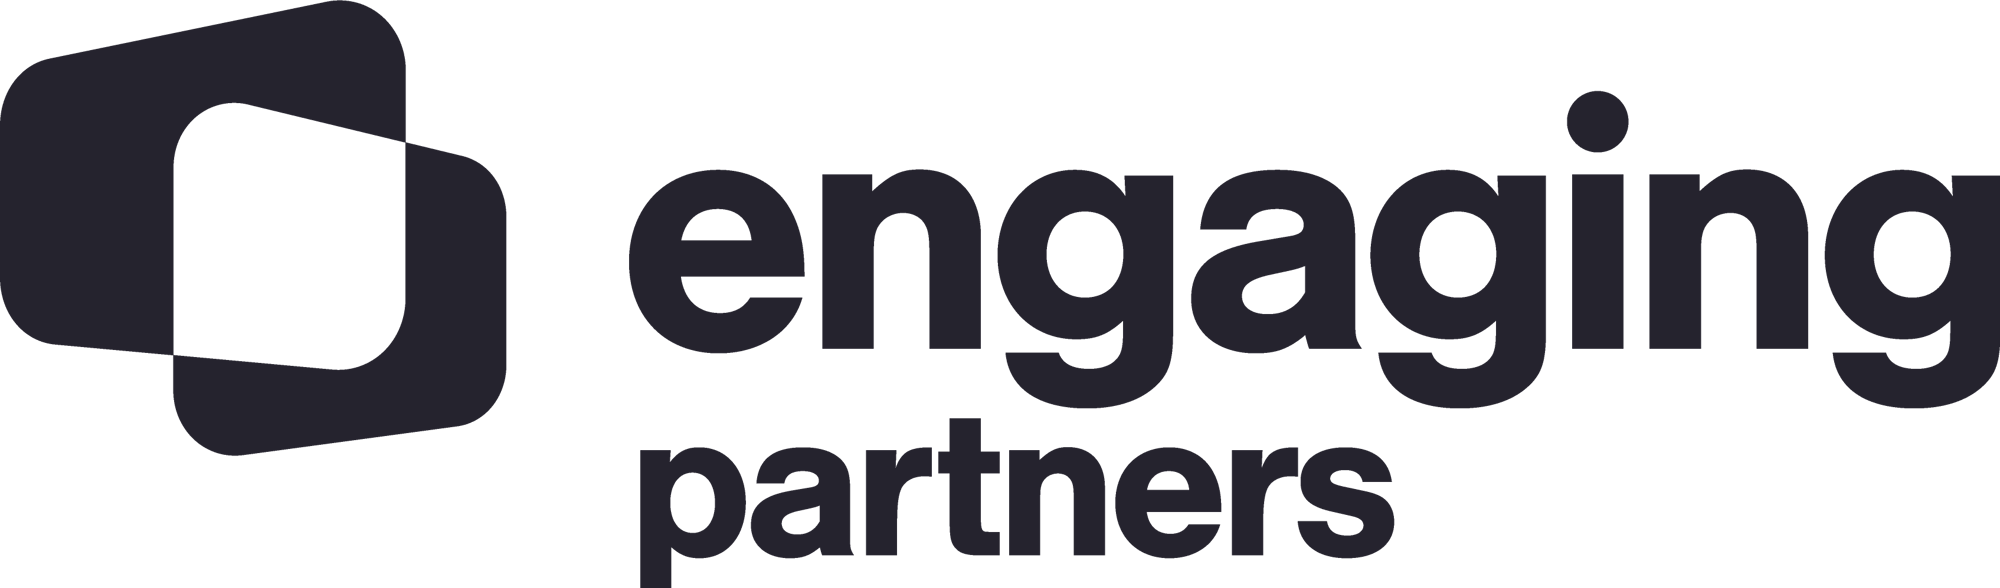 Engaging Partners Logo